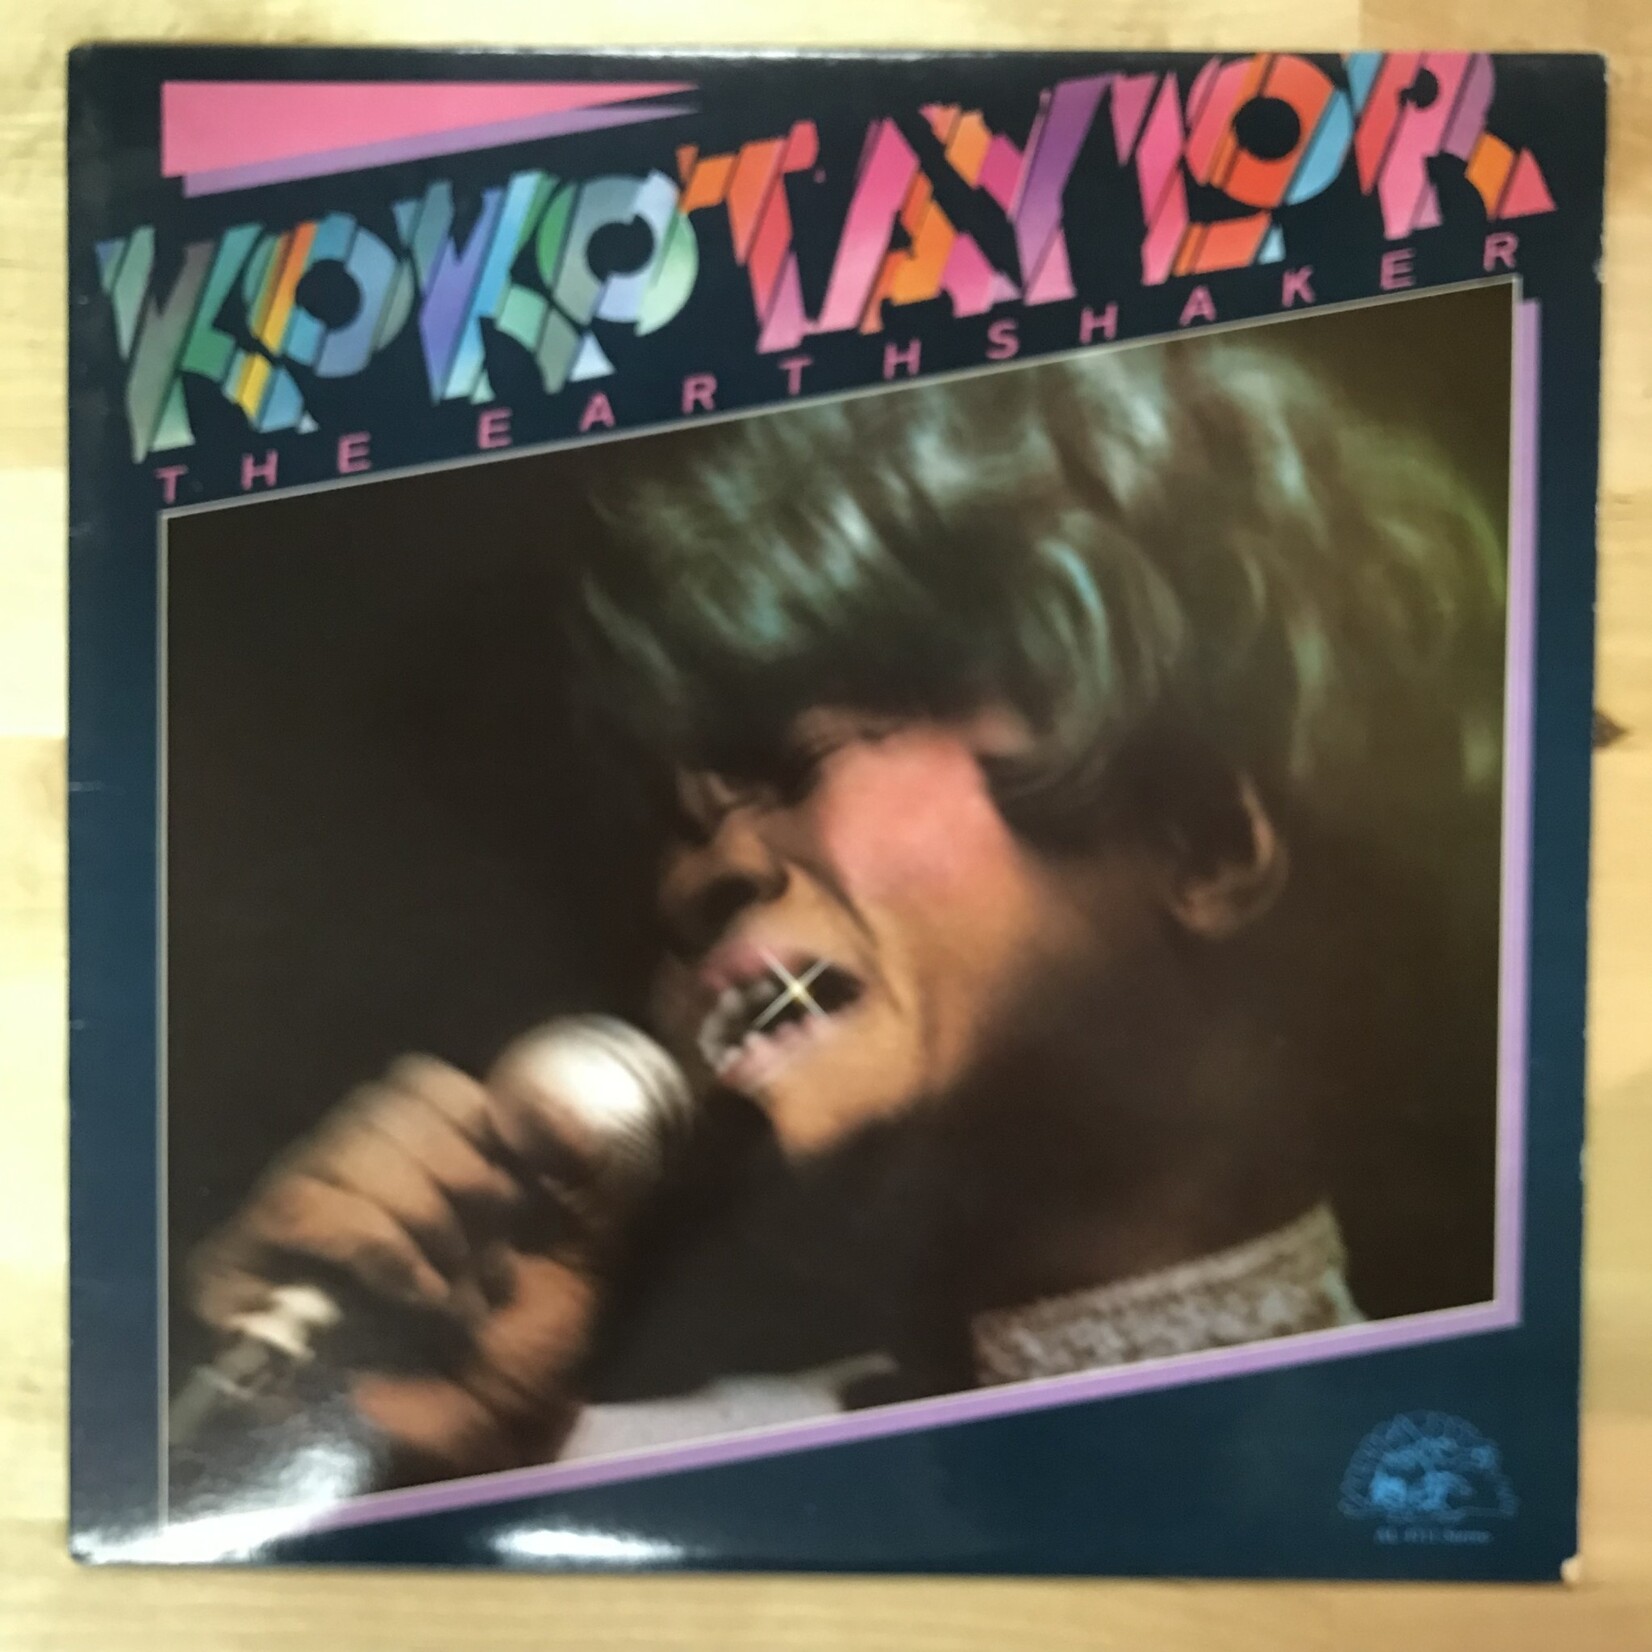 Koko Taylor - The Earthshaker - AL 4711 - Vinyl LP (USED)